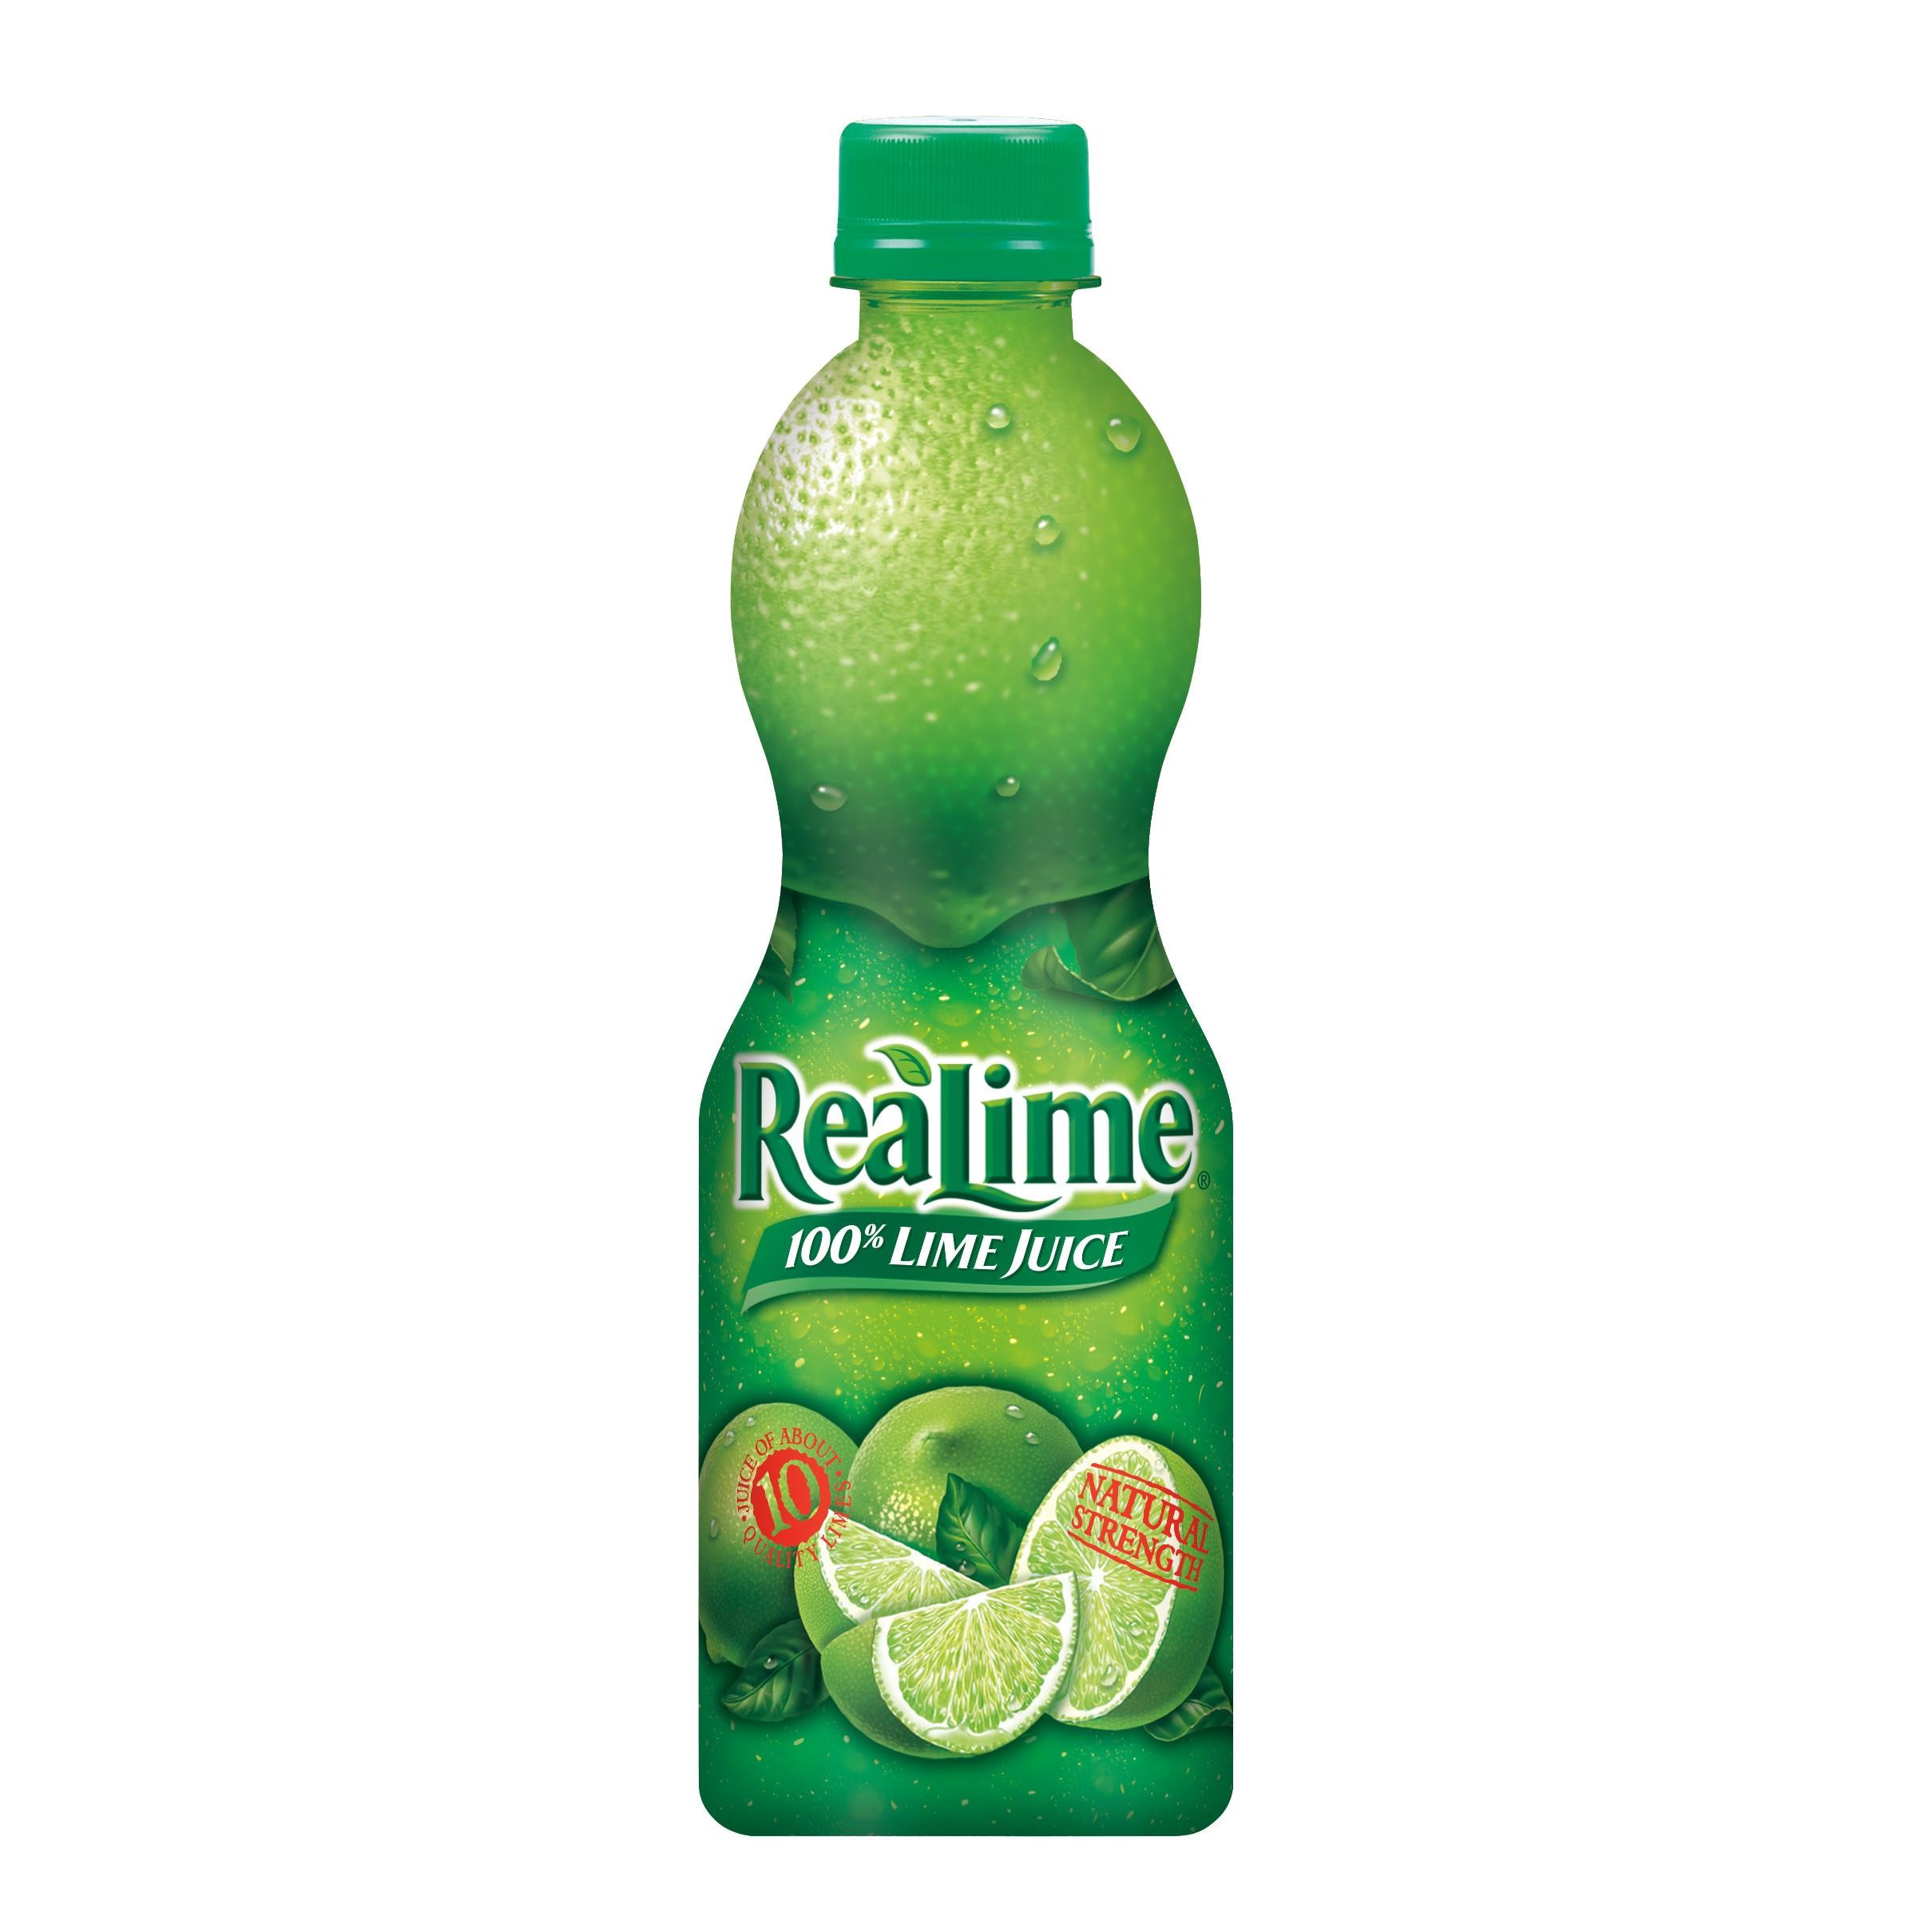 ReaLime 100% Lime Juice, 15.0 Oz - 15 Oz